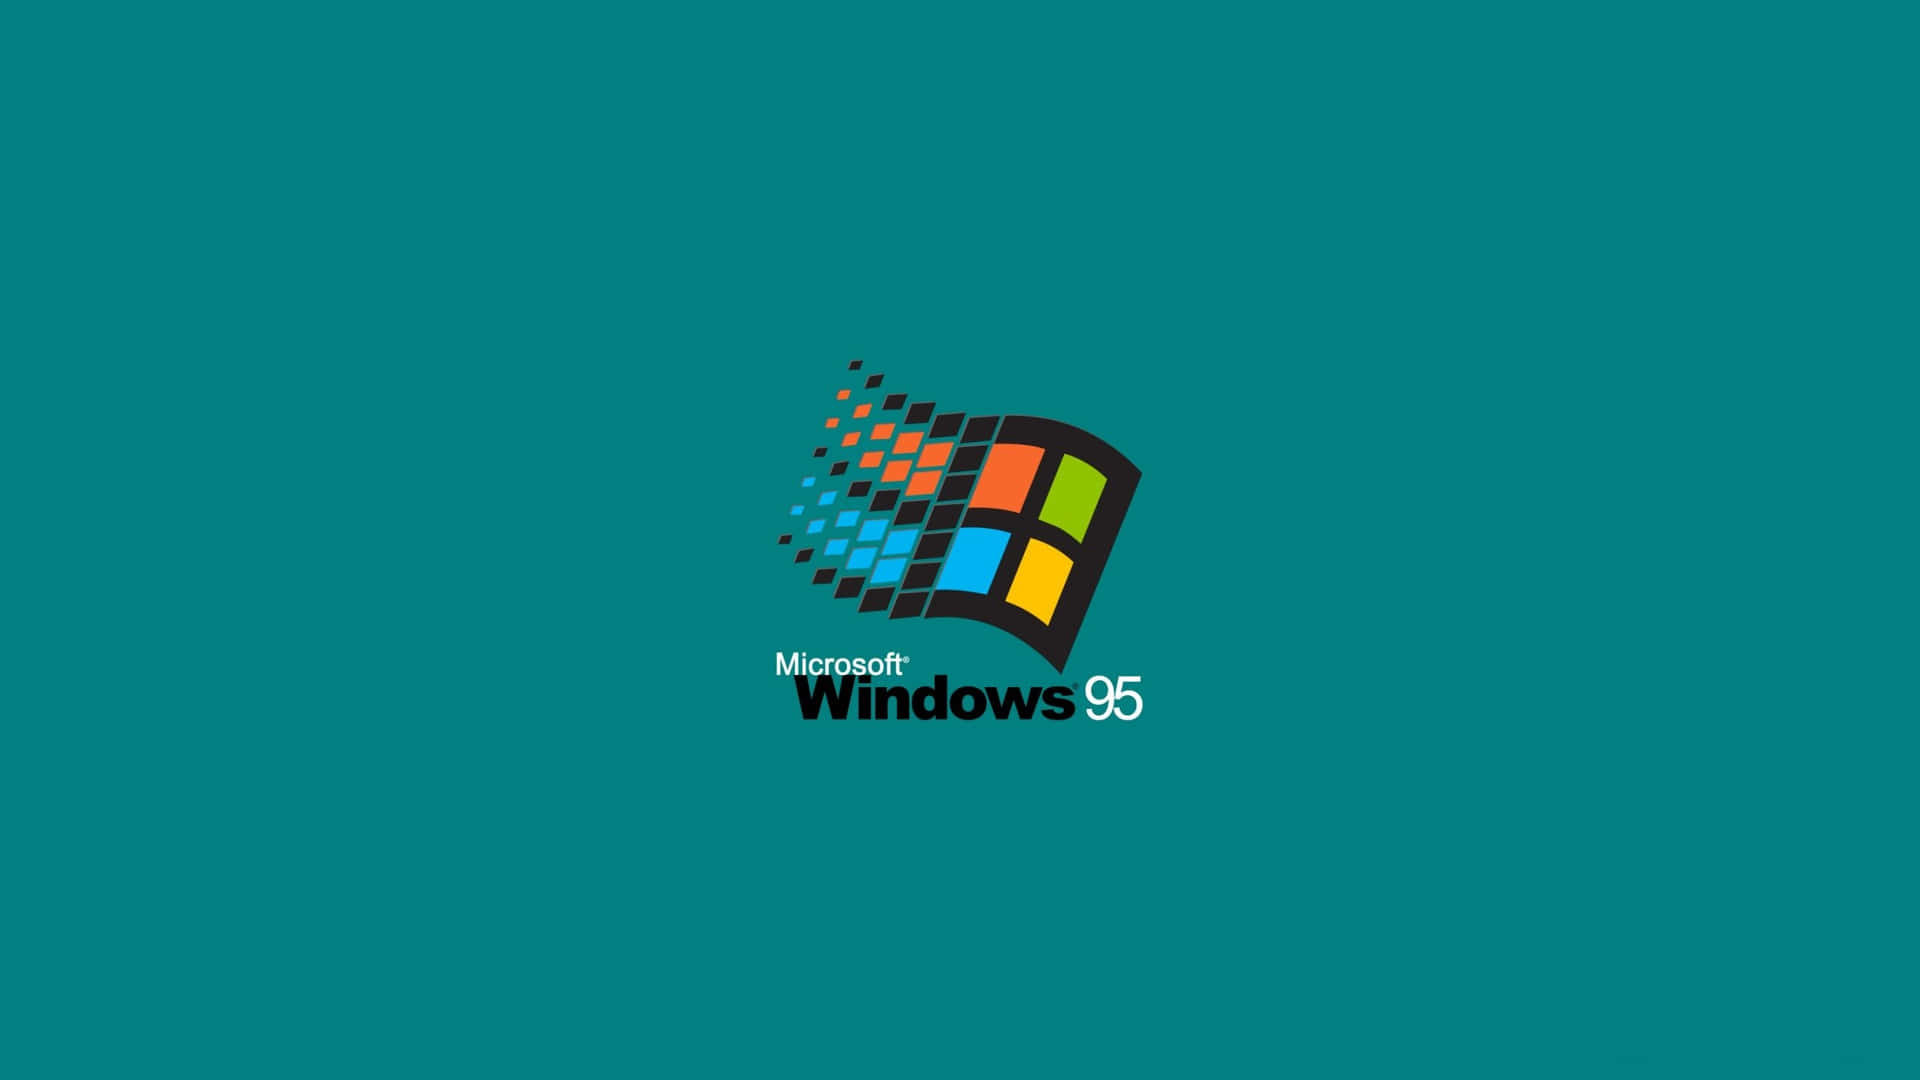 Old Logo In Teal Windows 1 Wallpaper